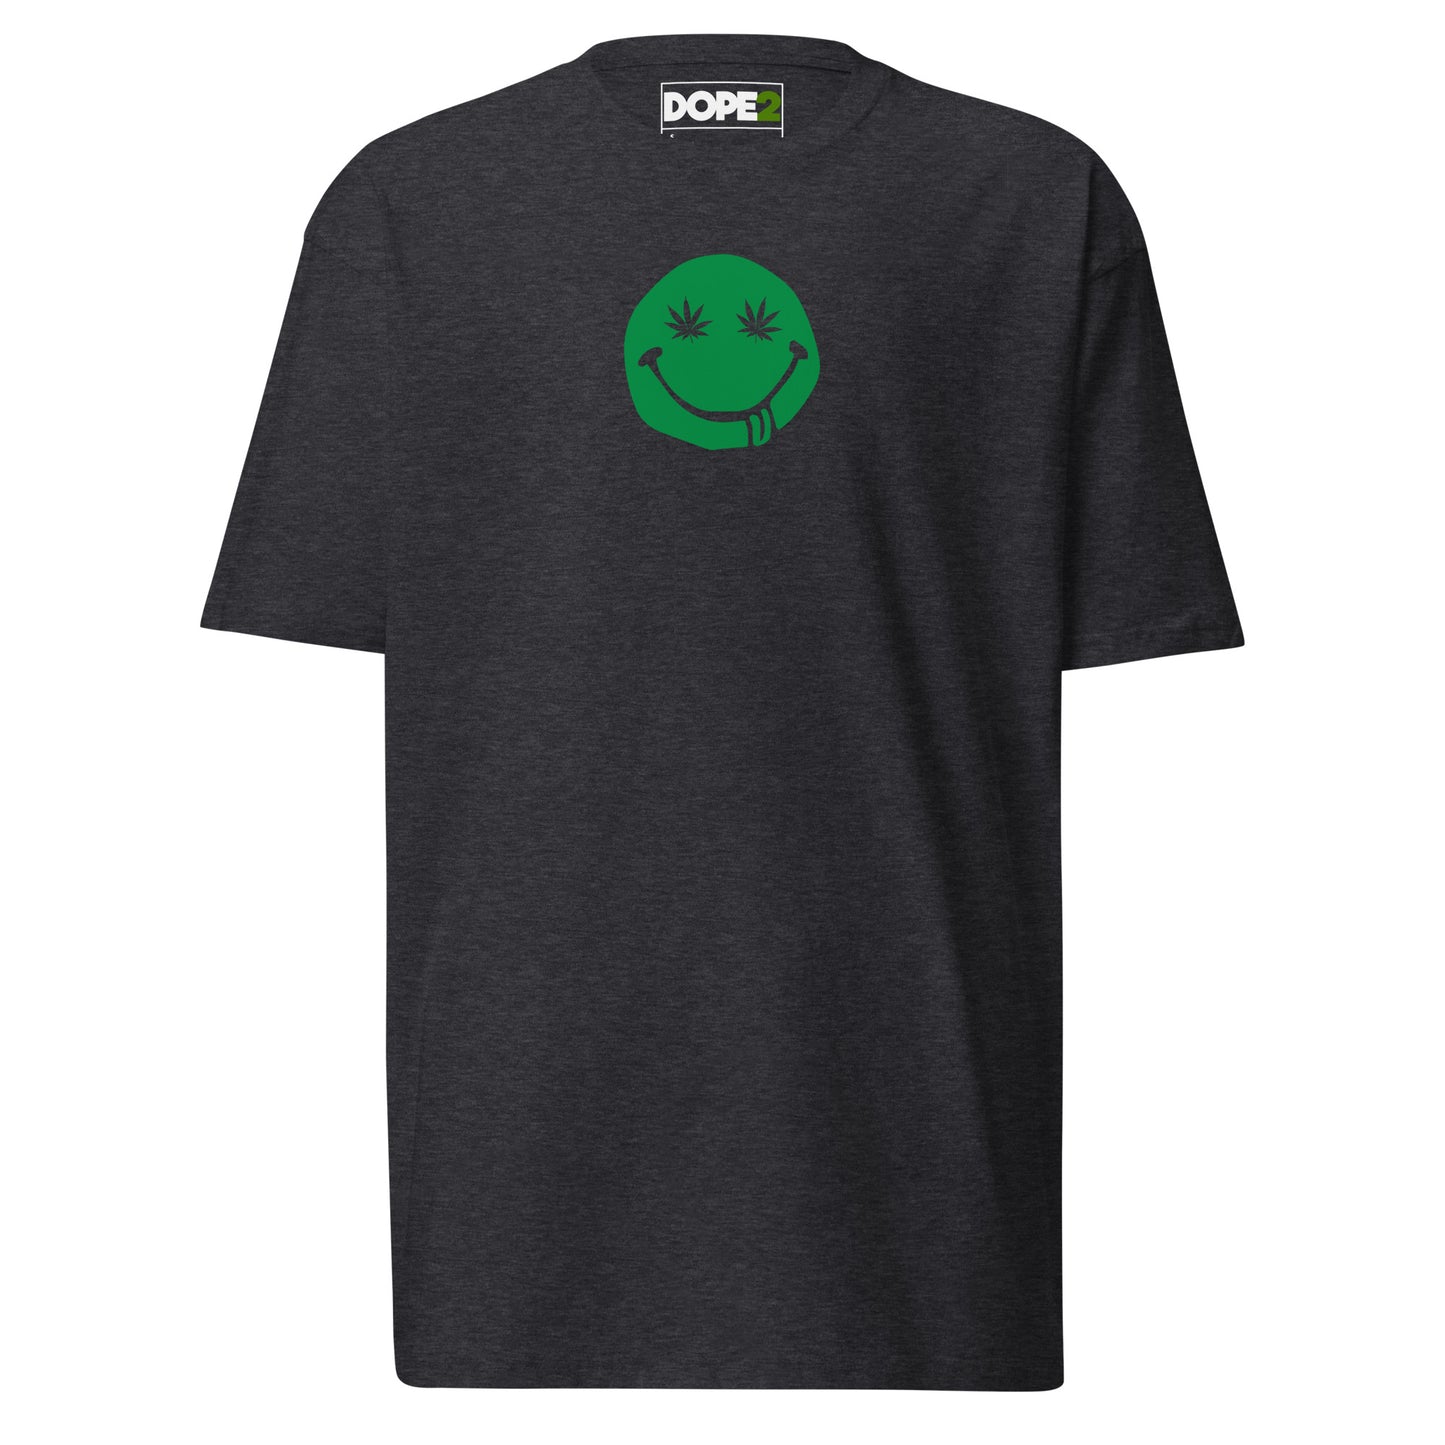 Dazed & Happy Smiley Men’s Premium T-shirt